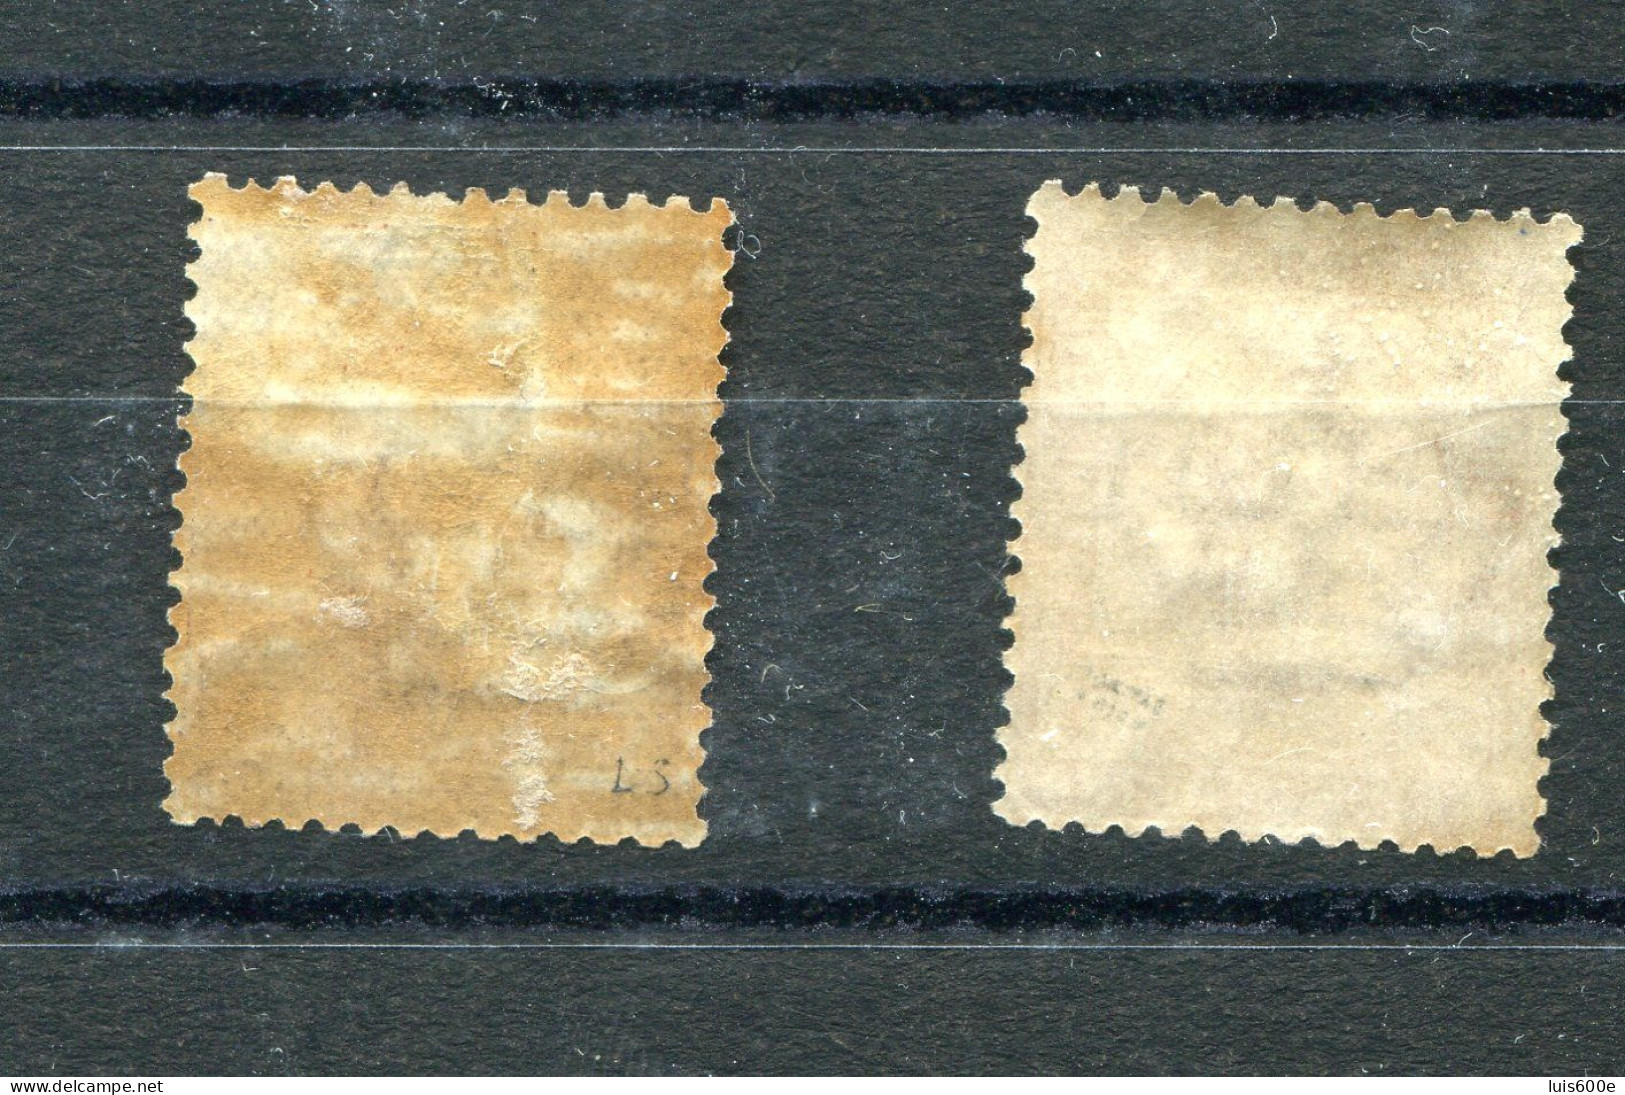 1899.SAN MARINO.YVERT 32/33*.NUEVOS CON FIJASELLOS(MH).CATALOGO 8€ - Unused Stamps